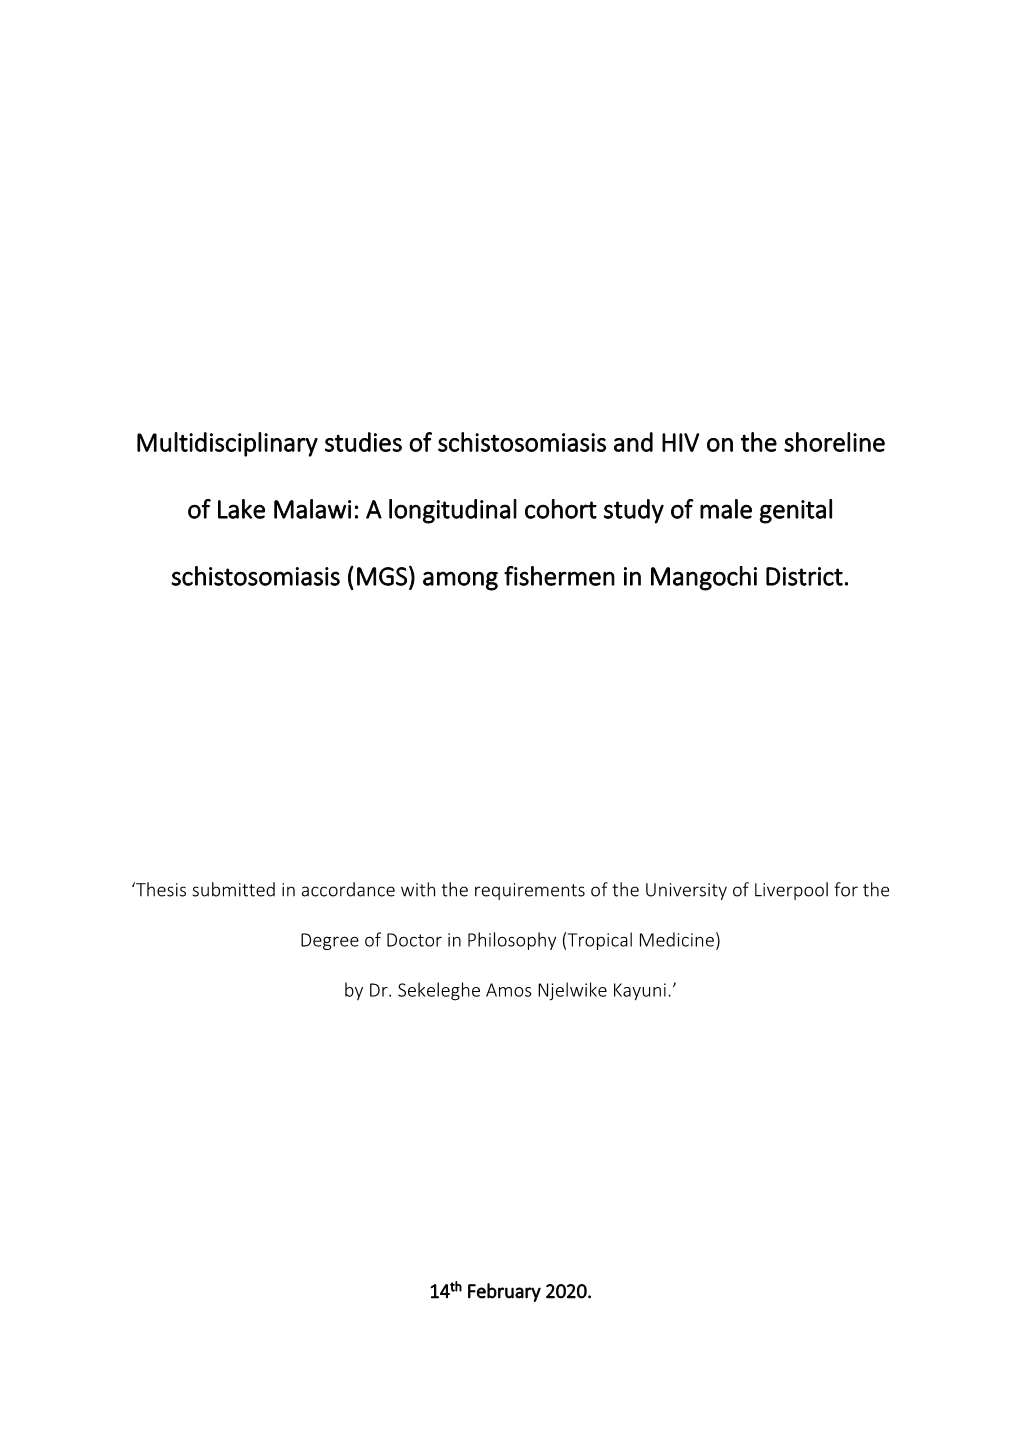 Multidisciplinary Studies of Schistosomiasis and HIV on the Shoreline